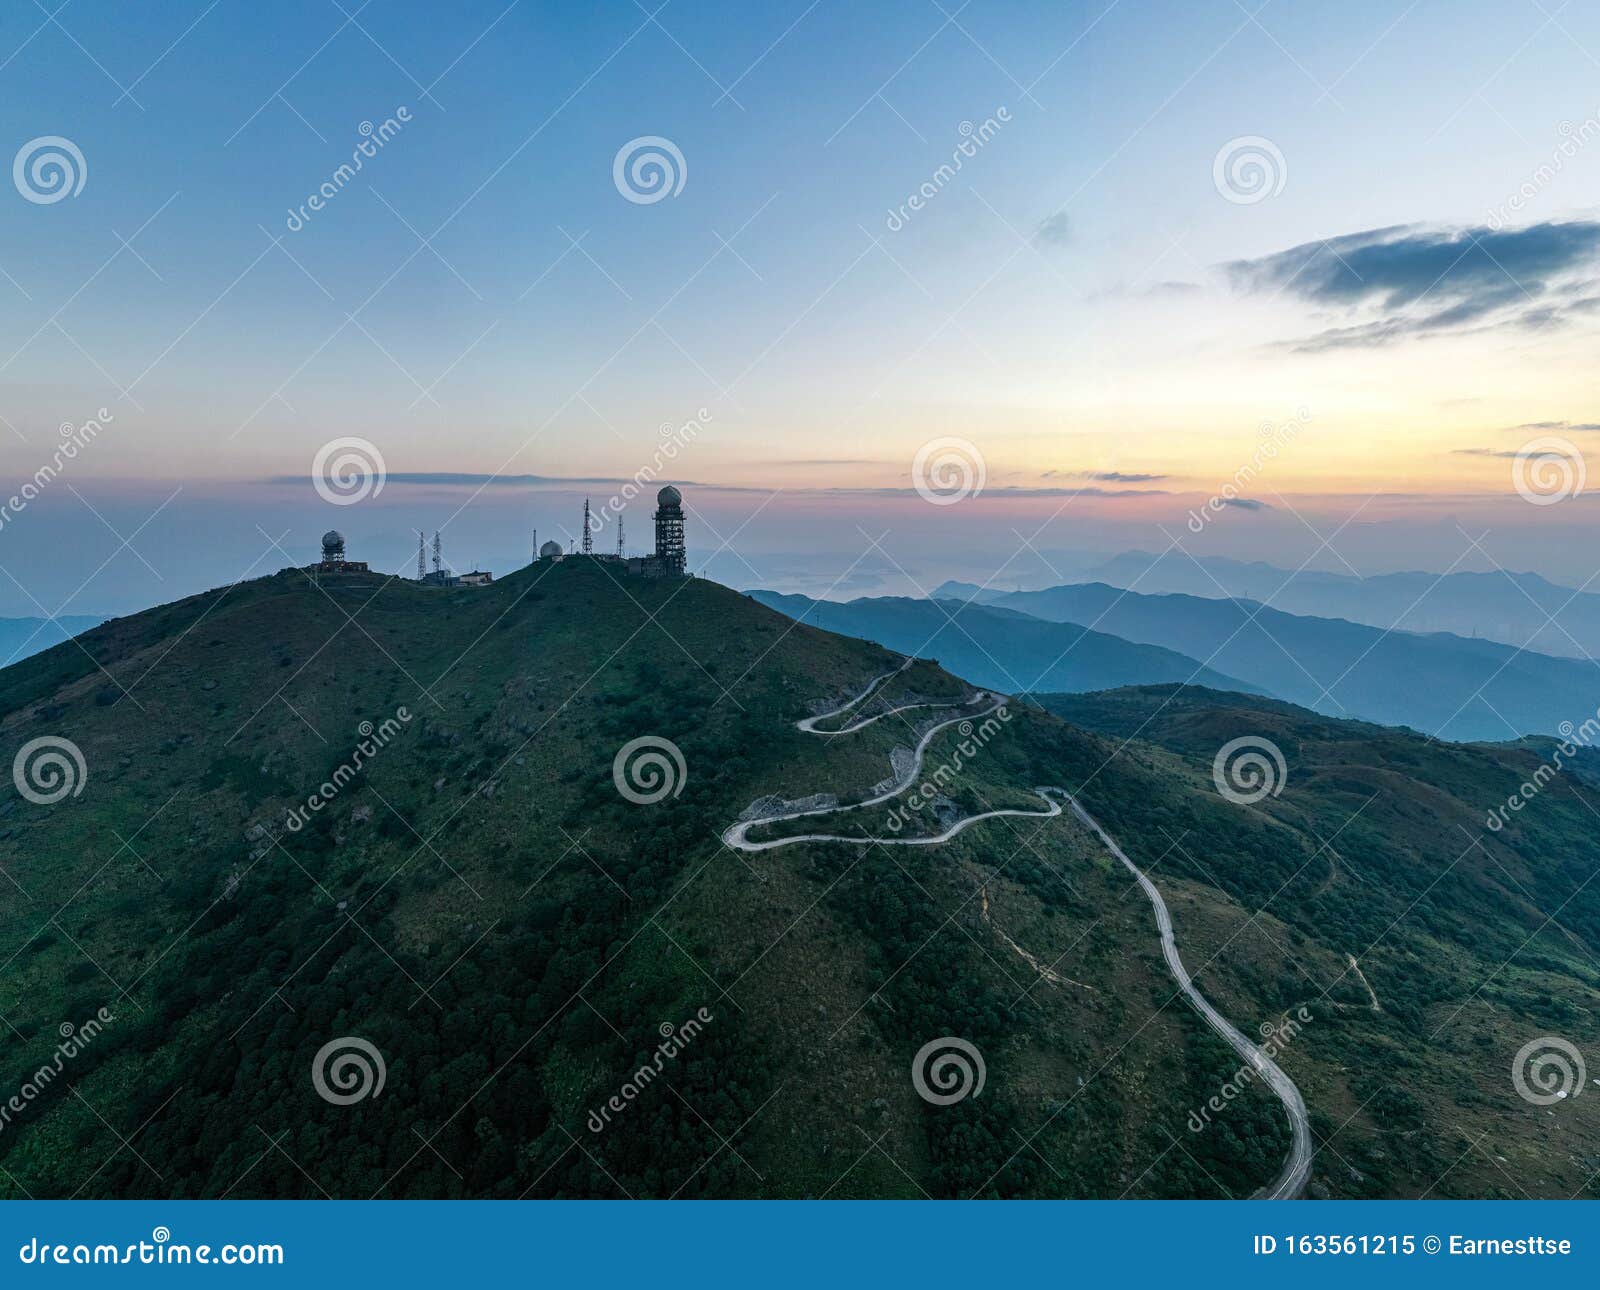 Mt. Dai Mo Shan and Weather Radar Site at Dawn Stock Image   Image ...